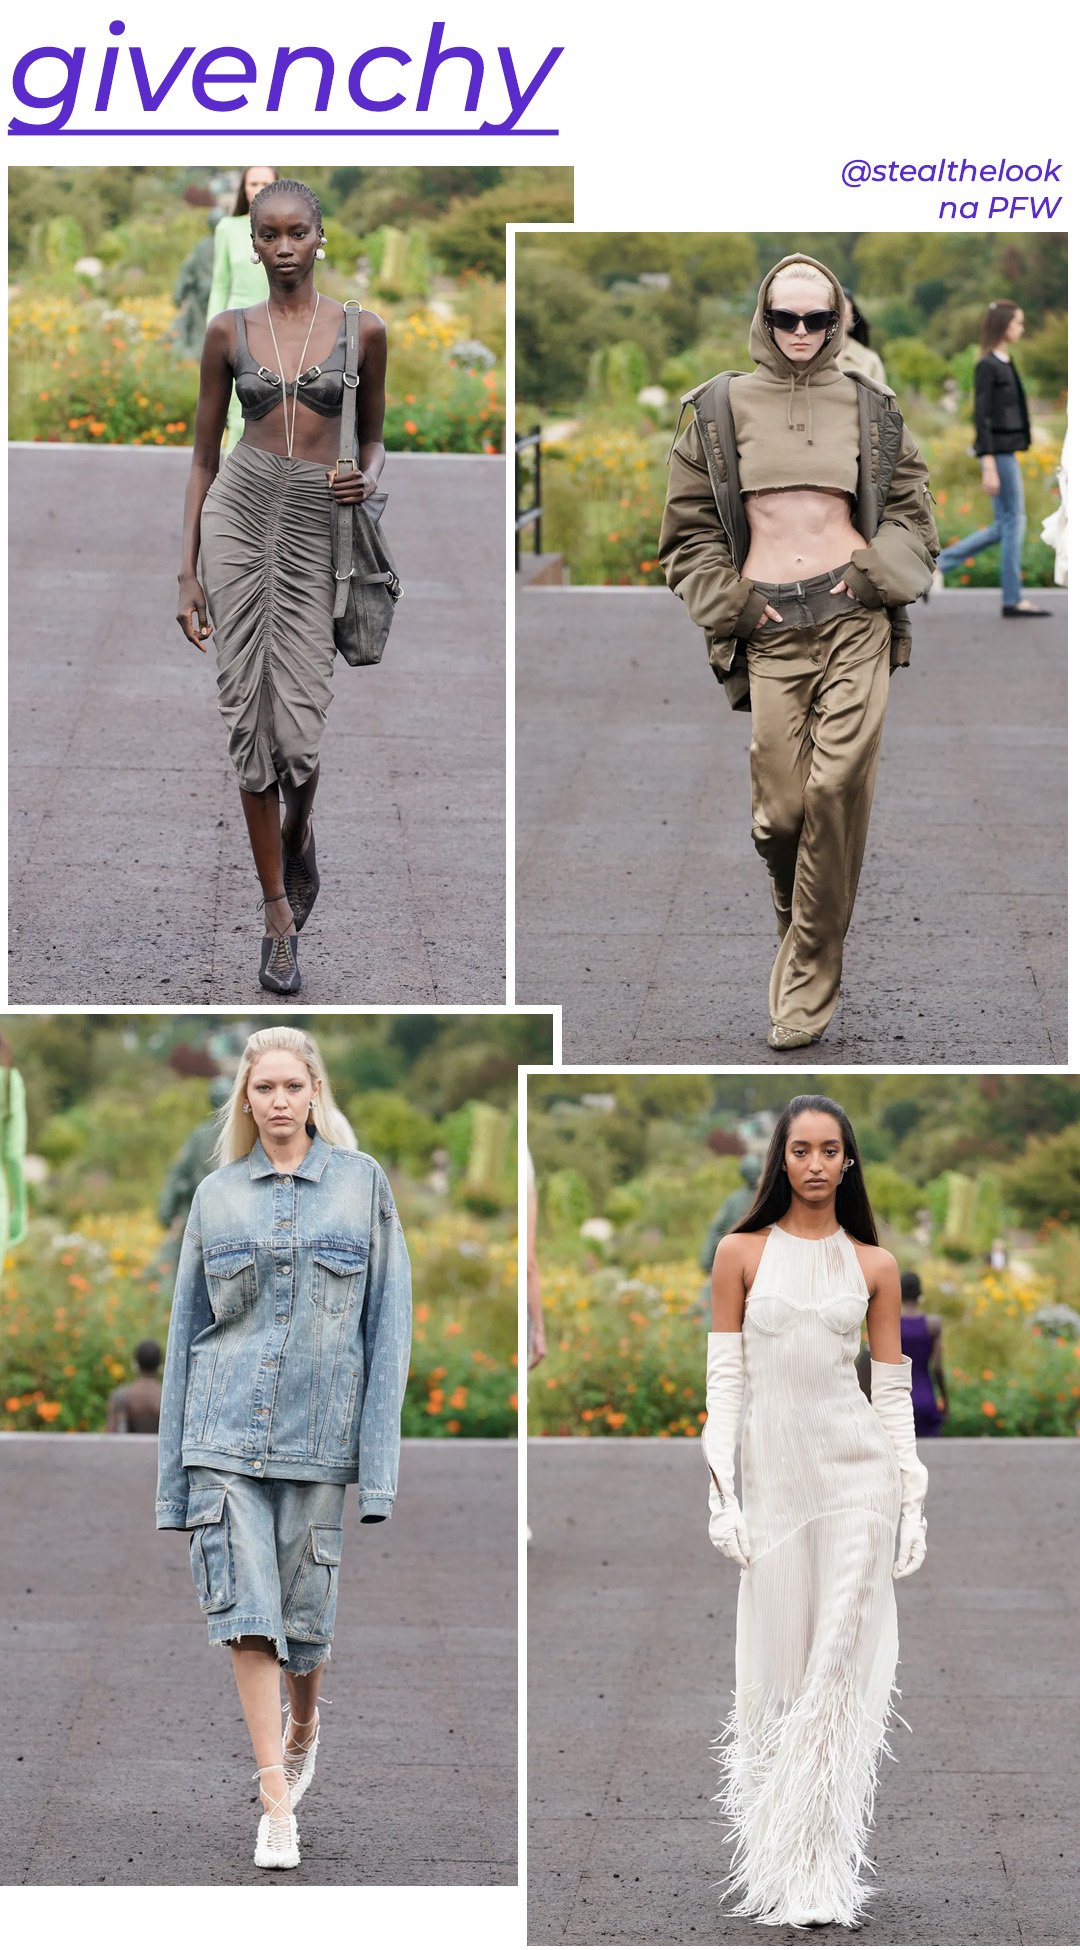 Givanchy S/S 2023 - roupas diversas - Paris Fashion Week - Primavera - modelo andando pela passarela - https://stealthelook.com.br